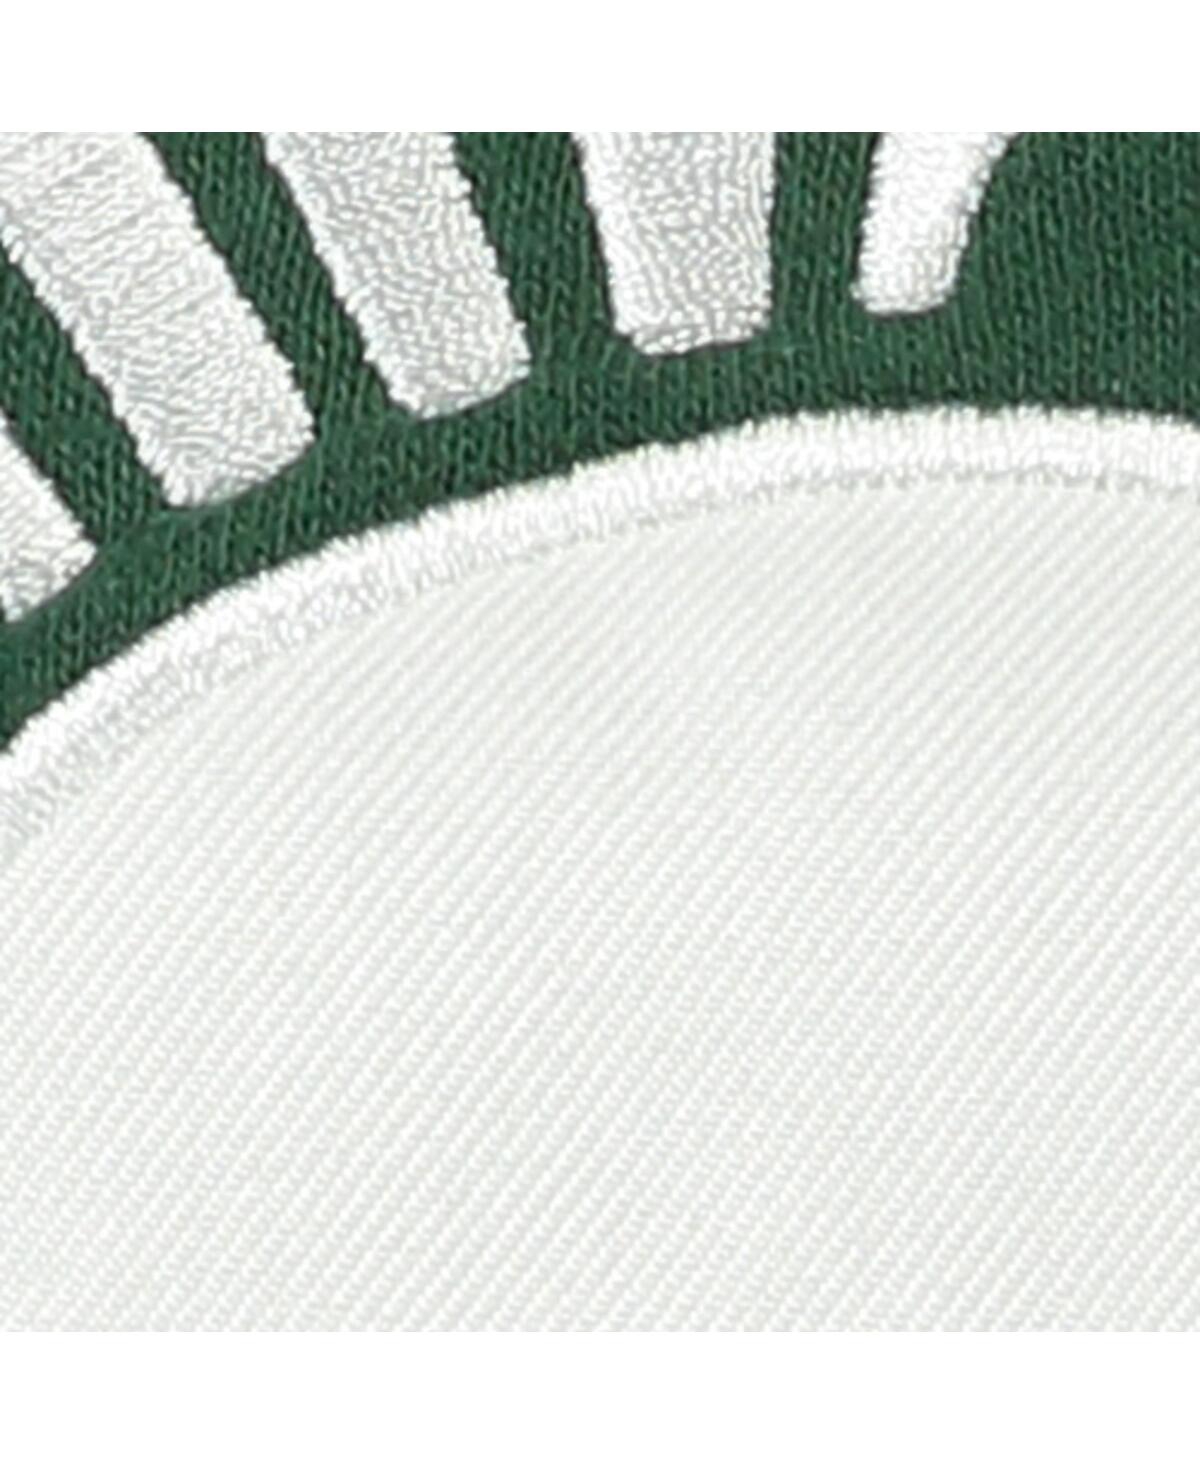 Shop Stadium Athletic Women's  Green Michigan State Spartans Big Logo Pullover Hoodie